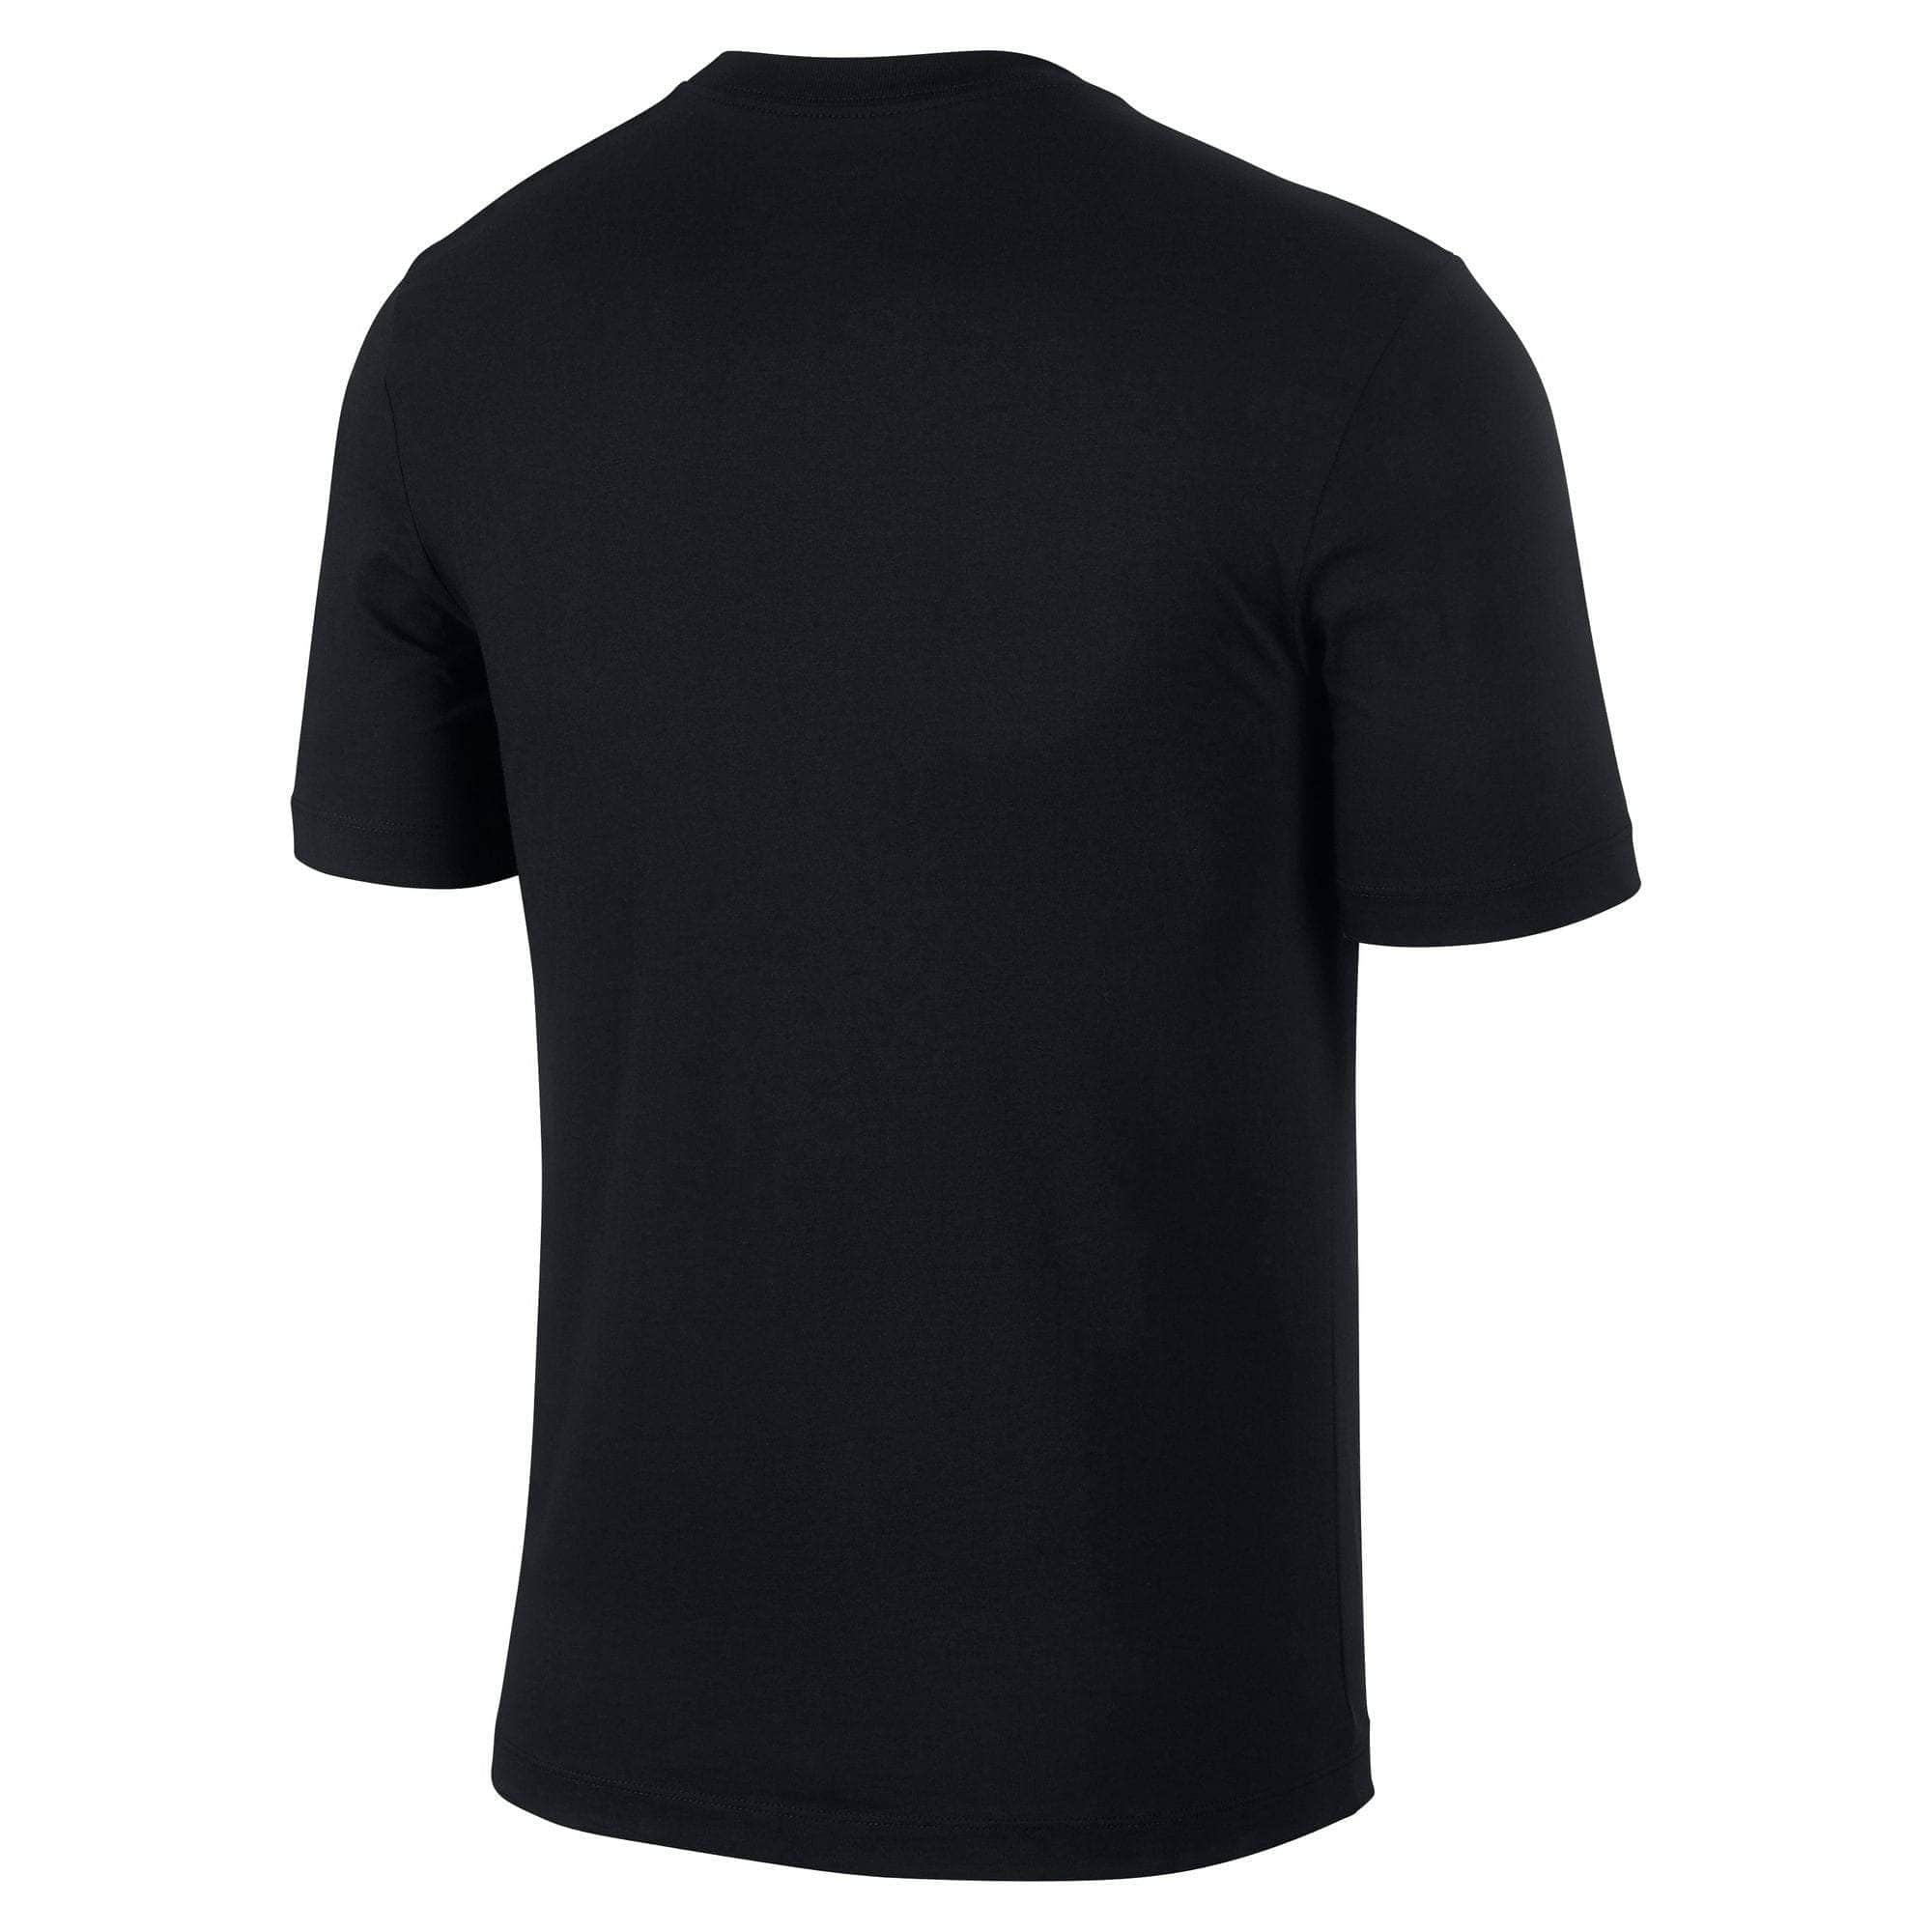 Nike APPAREL Nike Sportswear T-Shirt - Men's